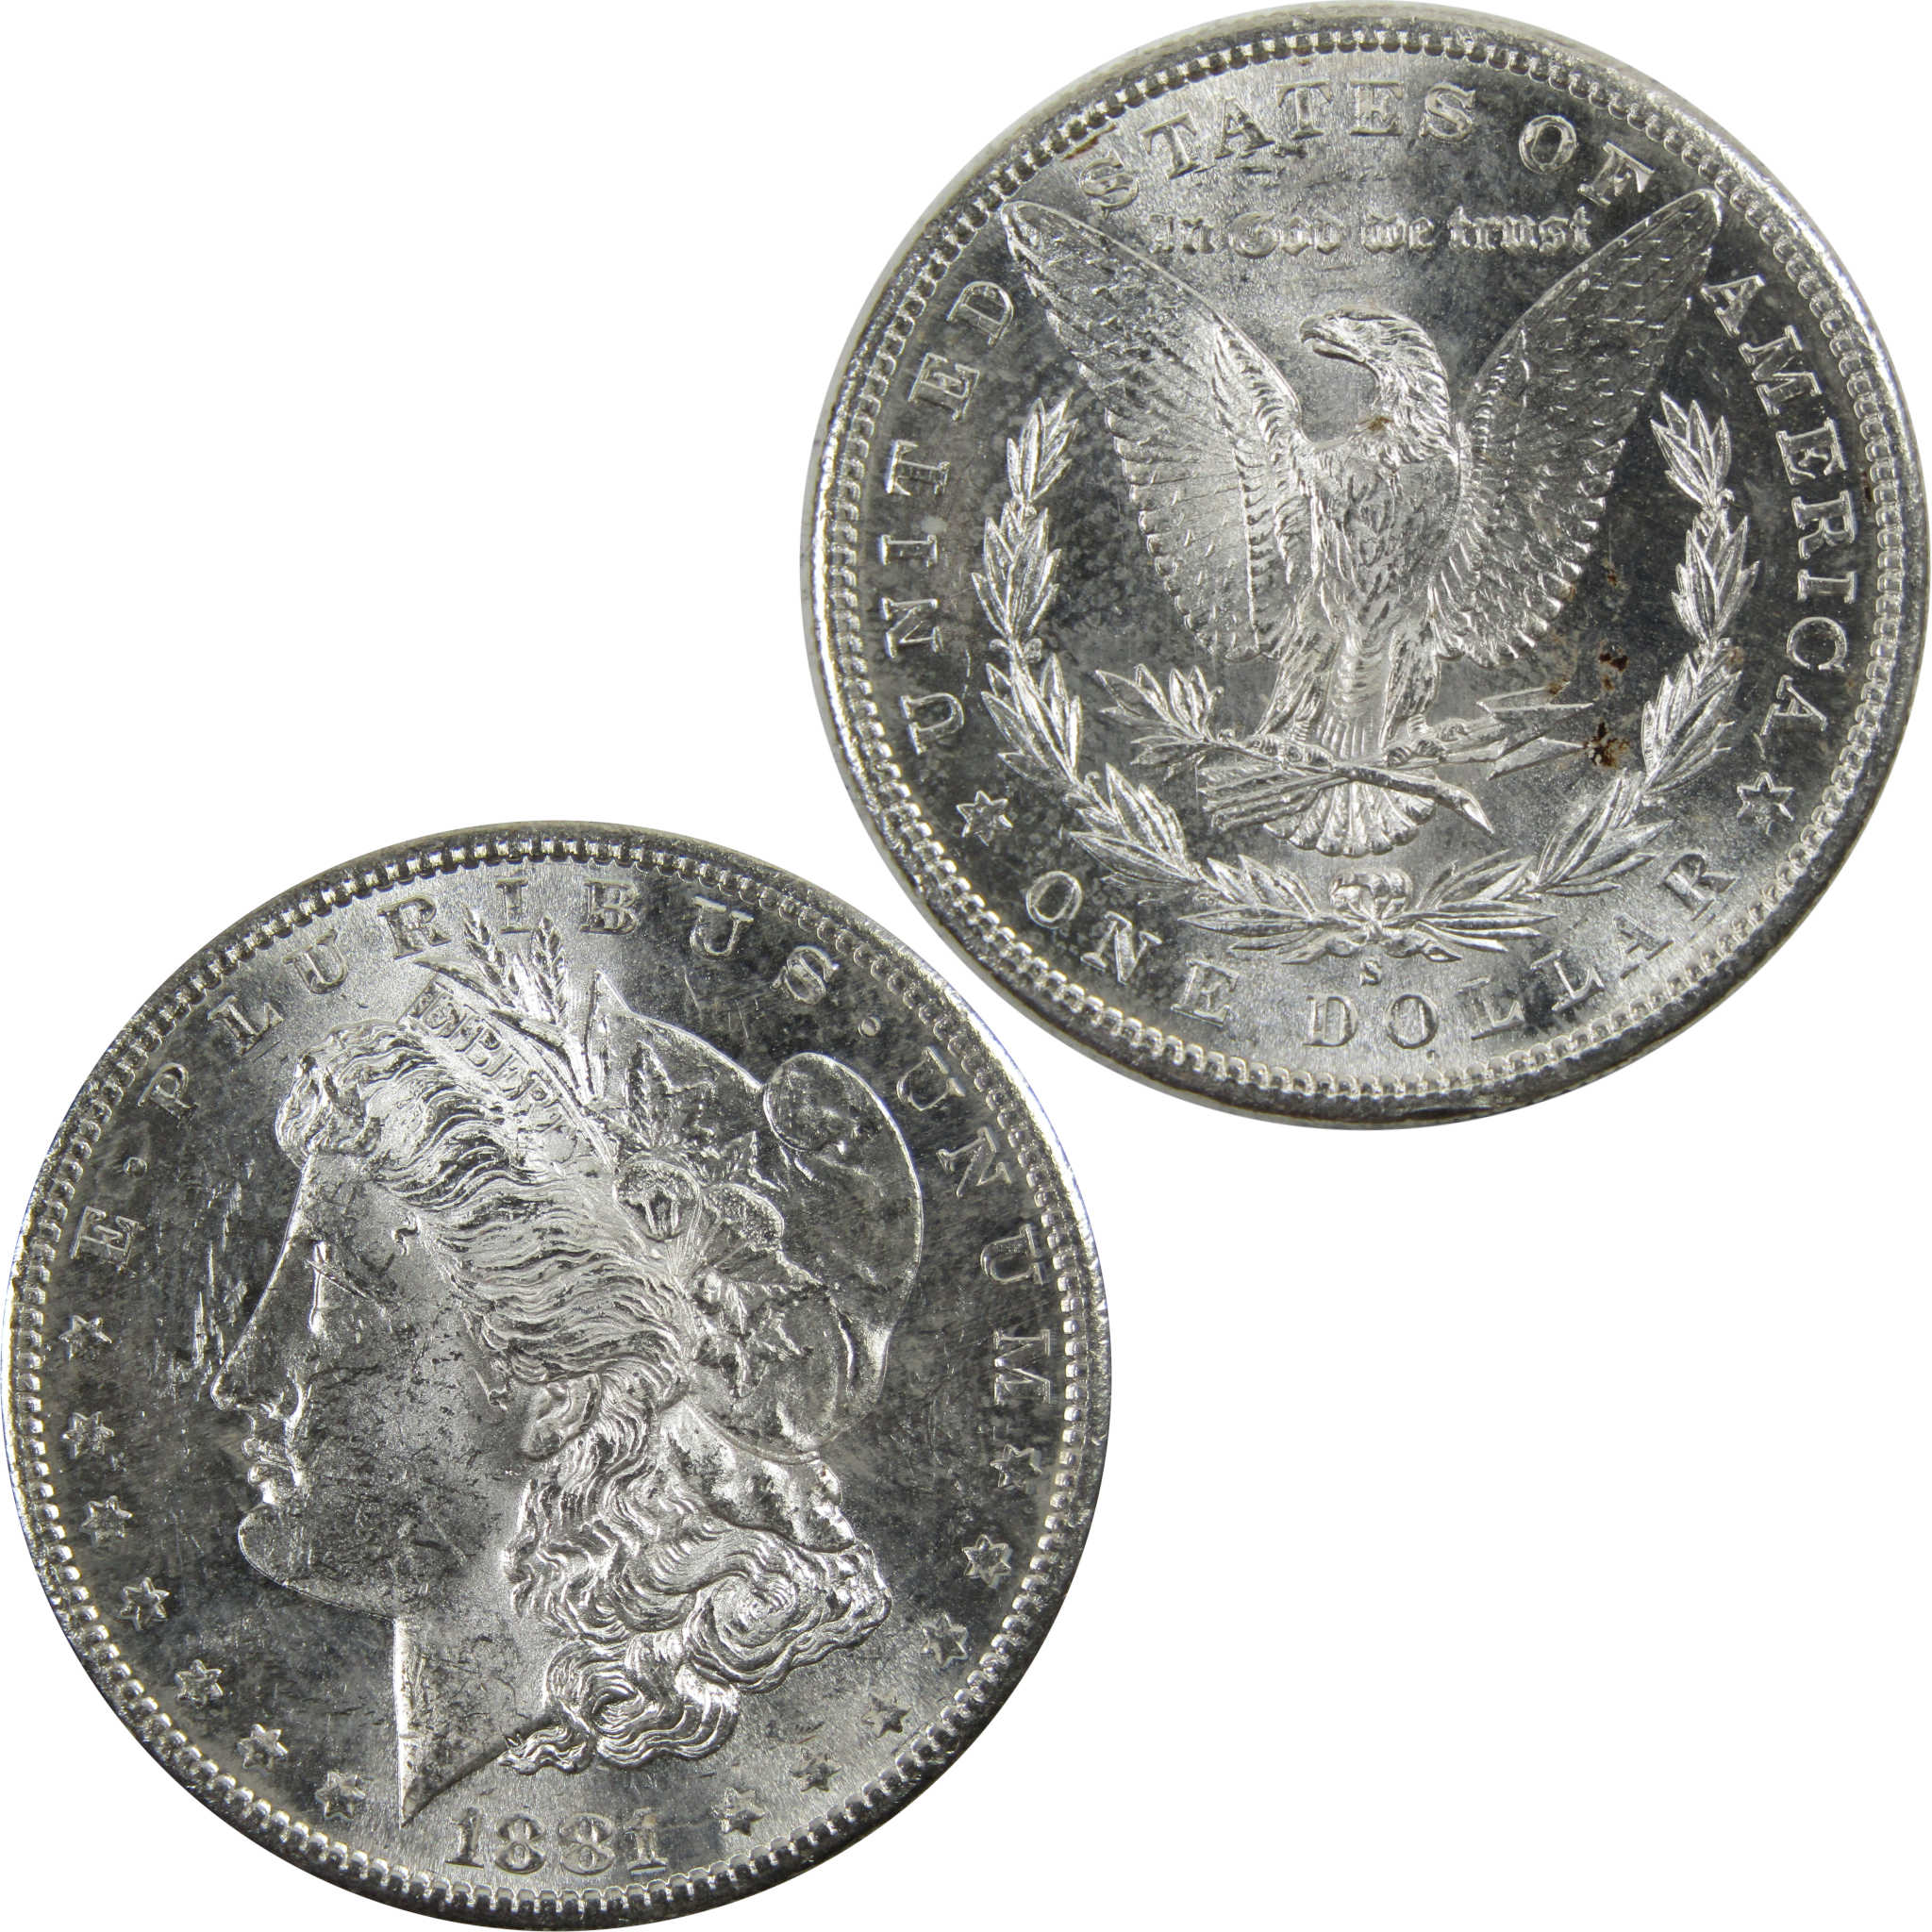 1881 S Morgan Dollar BU Uncirculated 90% Silver $1 Coin SKU:I5310 - Morgan coin - Morgan silver dollar - Morgan silver dollar for sale - Profile Coins &amp; Collectibles